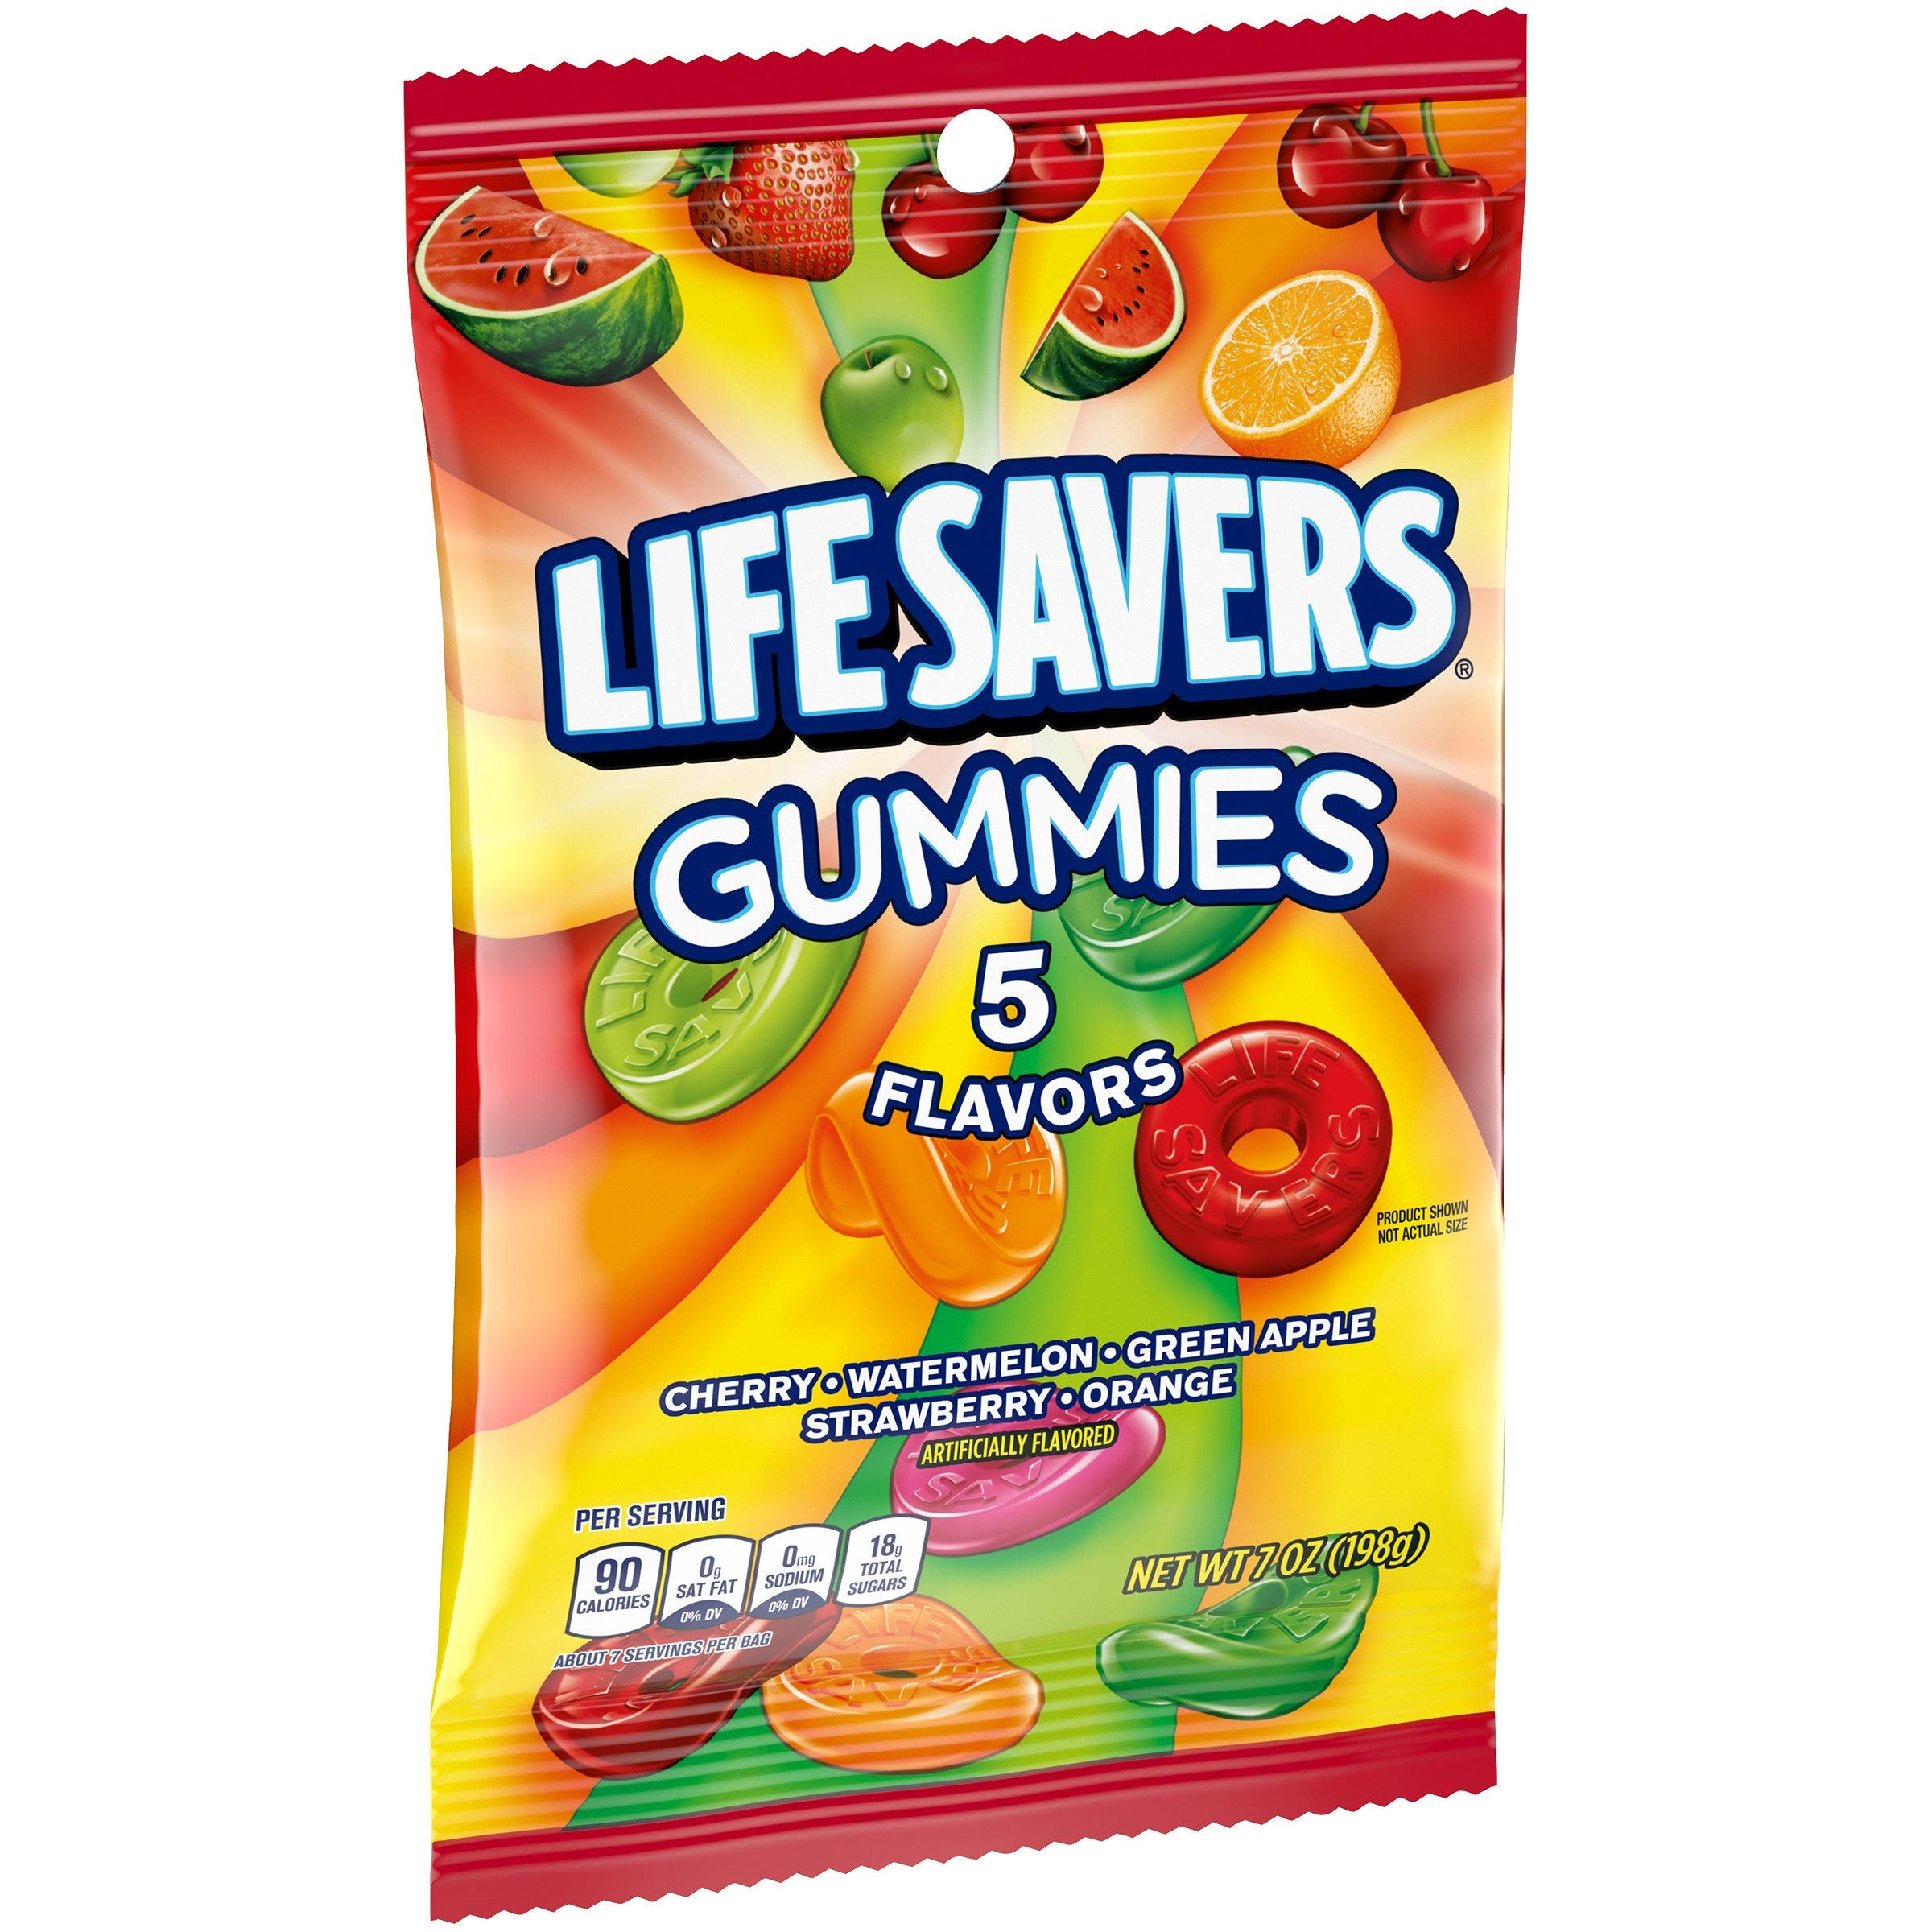 Life Savers Gummies - 5 Flavors, 7 oz